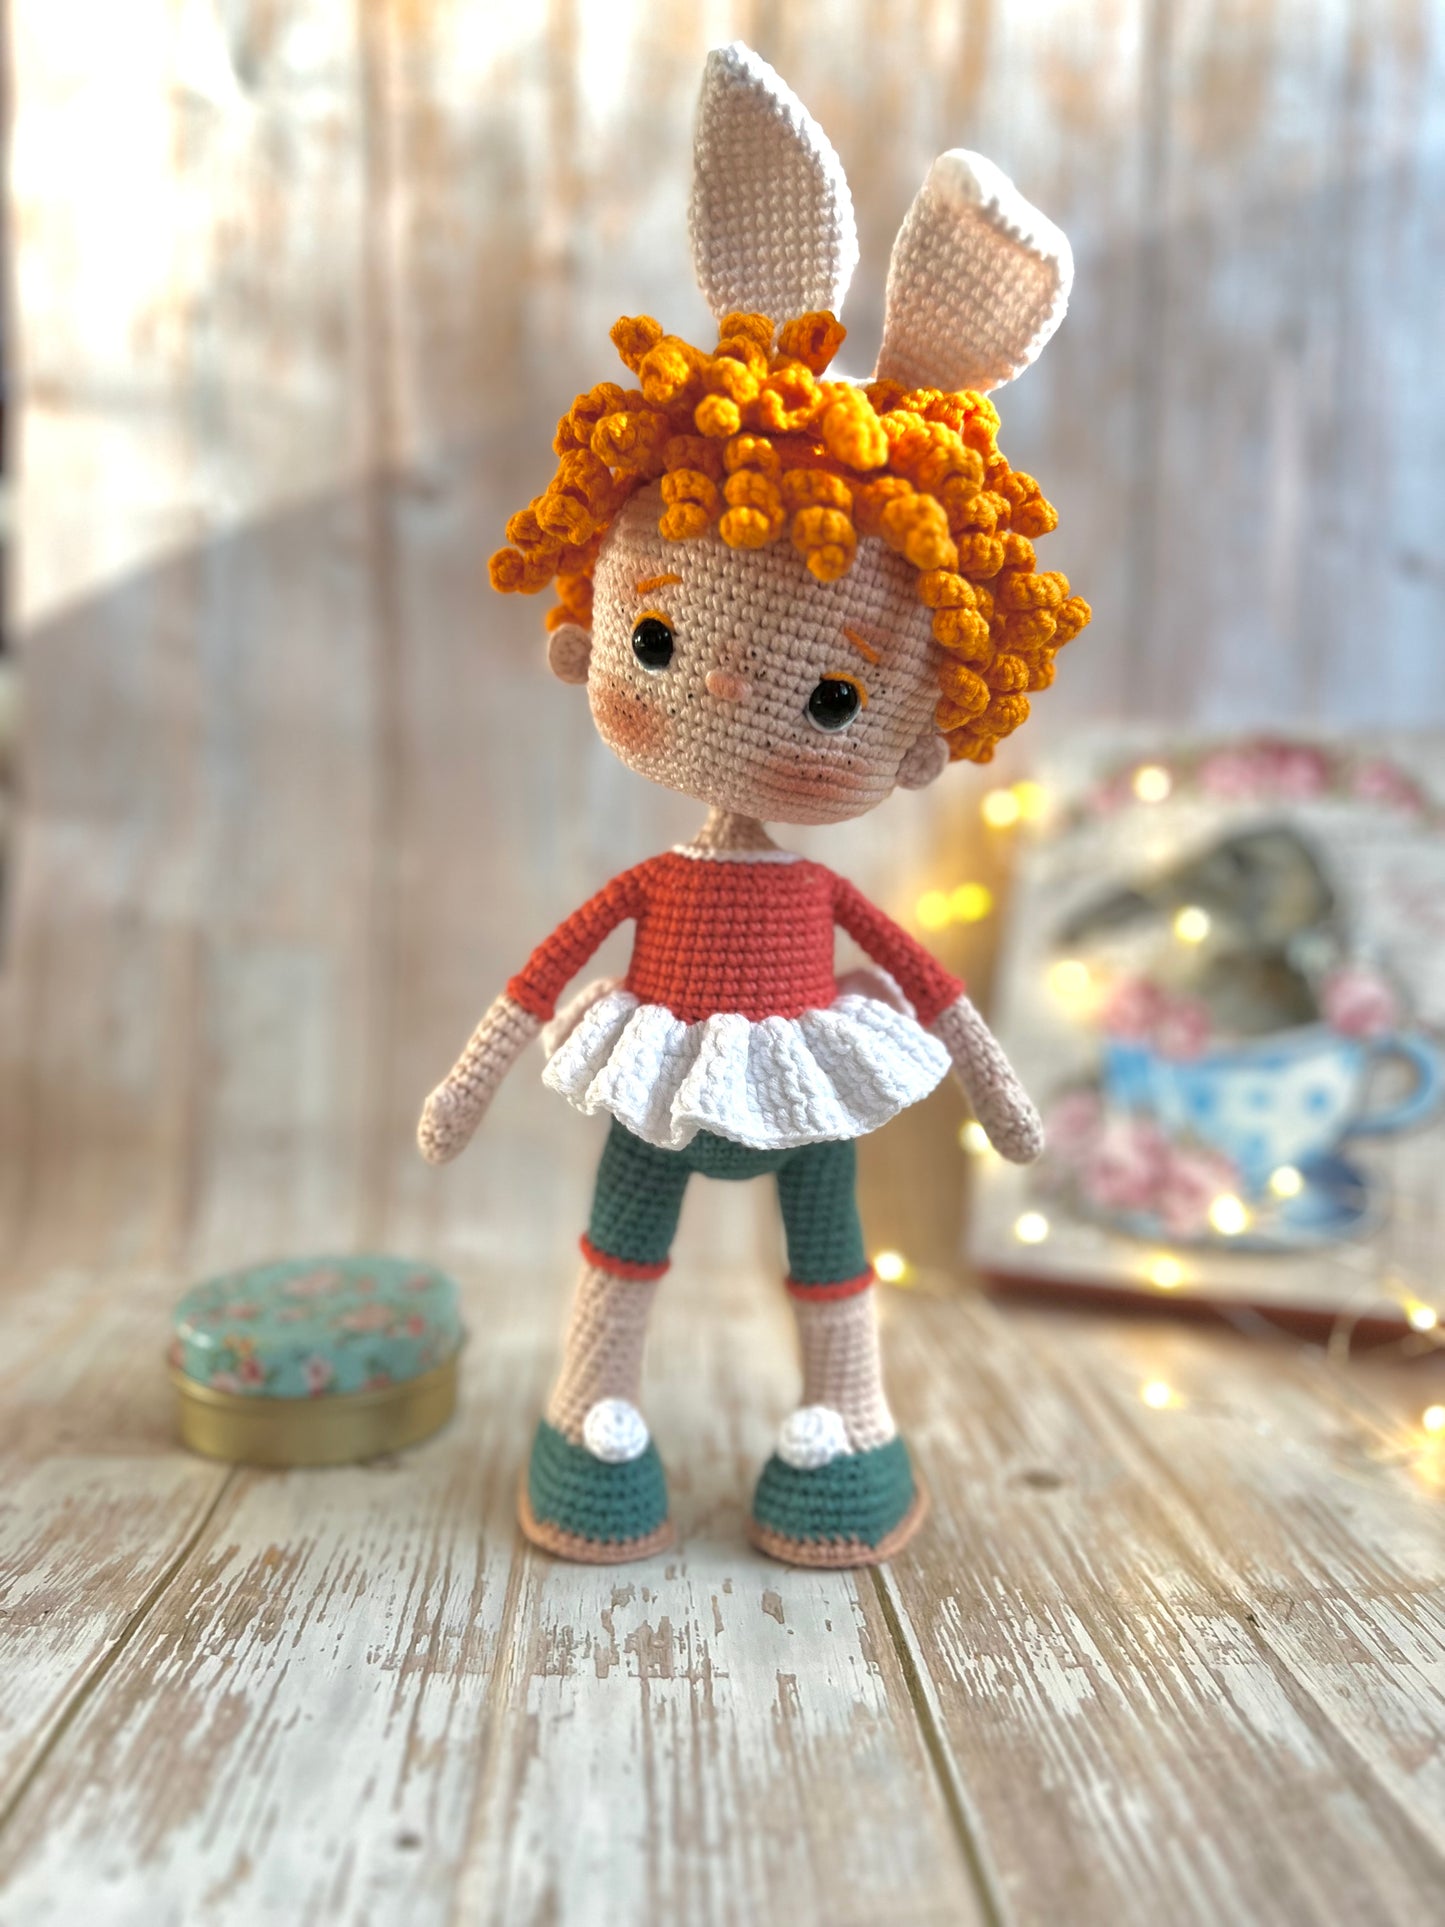 Bunny Girl, Crocheted Girl with Bunny Headband, Readymade Amigurumi Doll, Handcrafted, Kids Gifts, Artisan Doll, Limited Edition Baby Dolls, Collectible Handmade